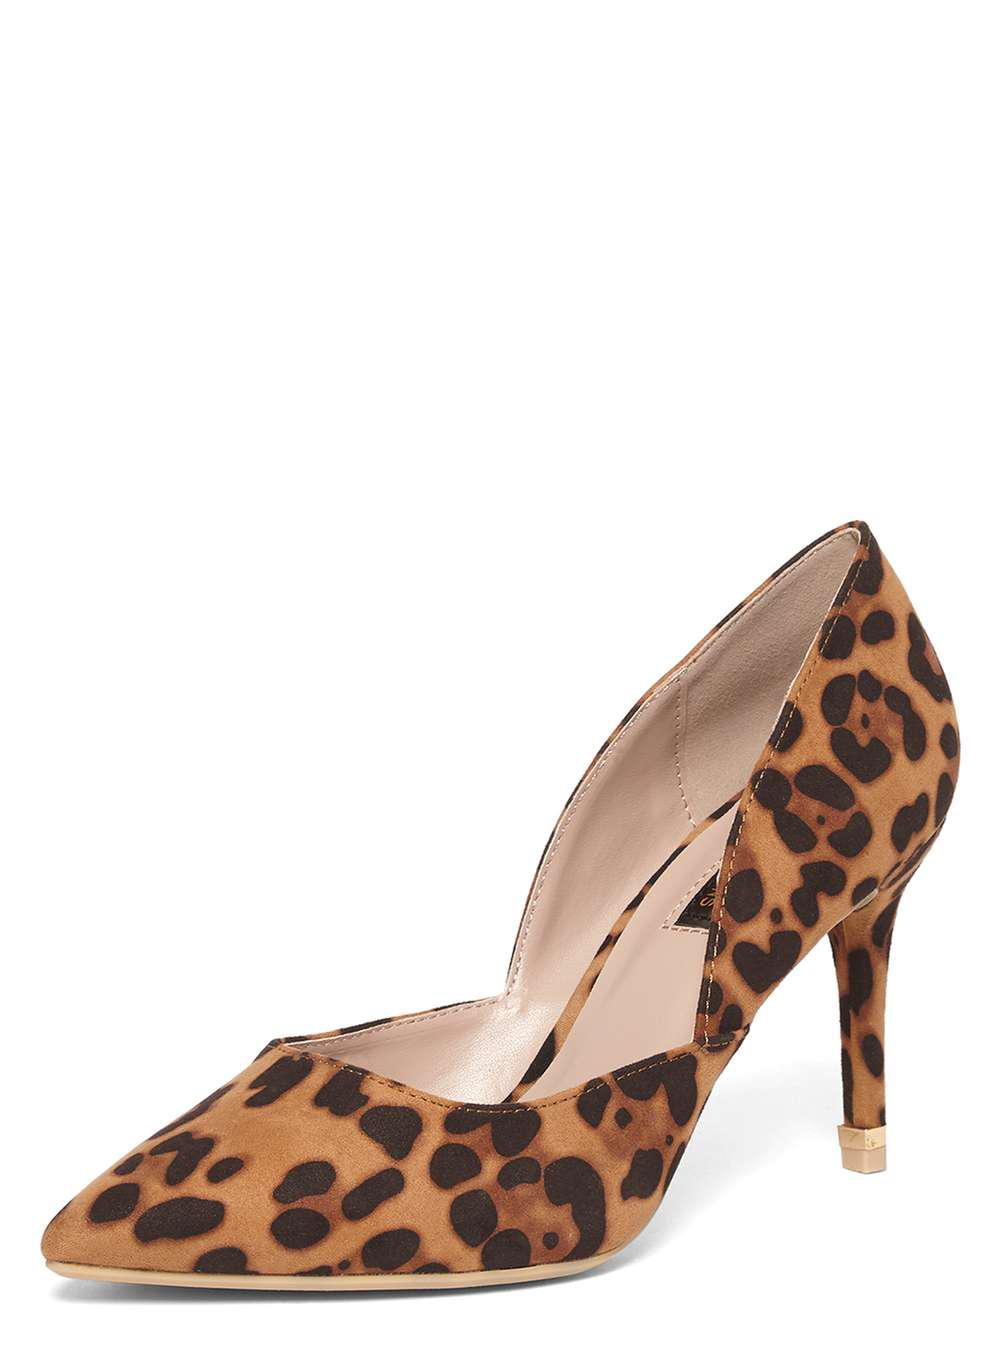 dorothy perkins leopard print chaussure 